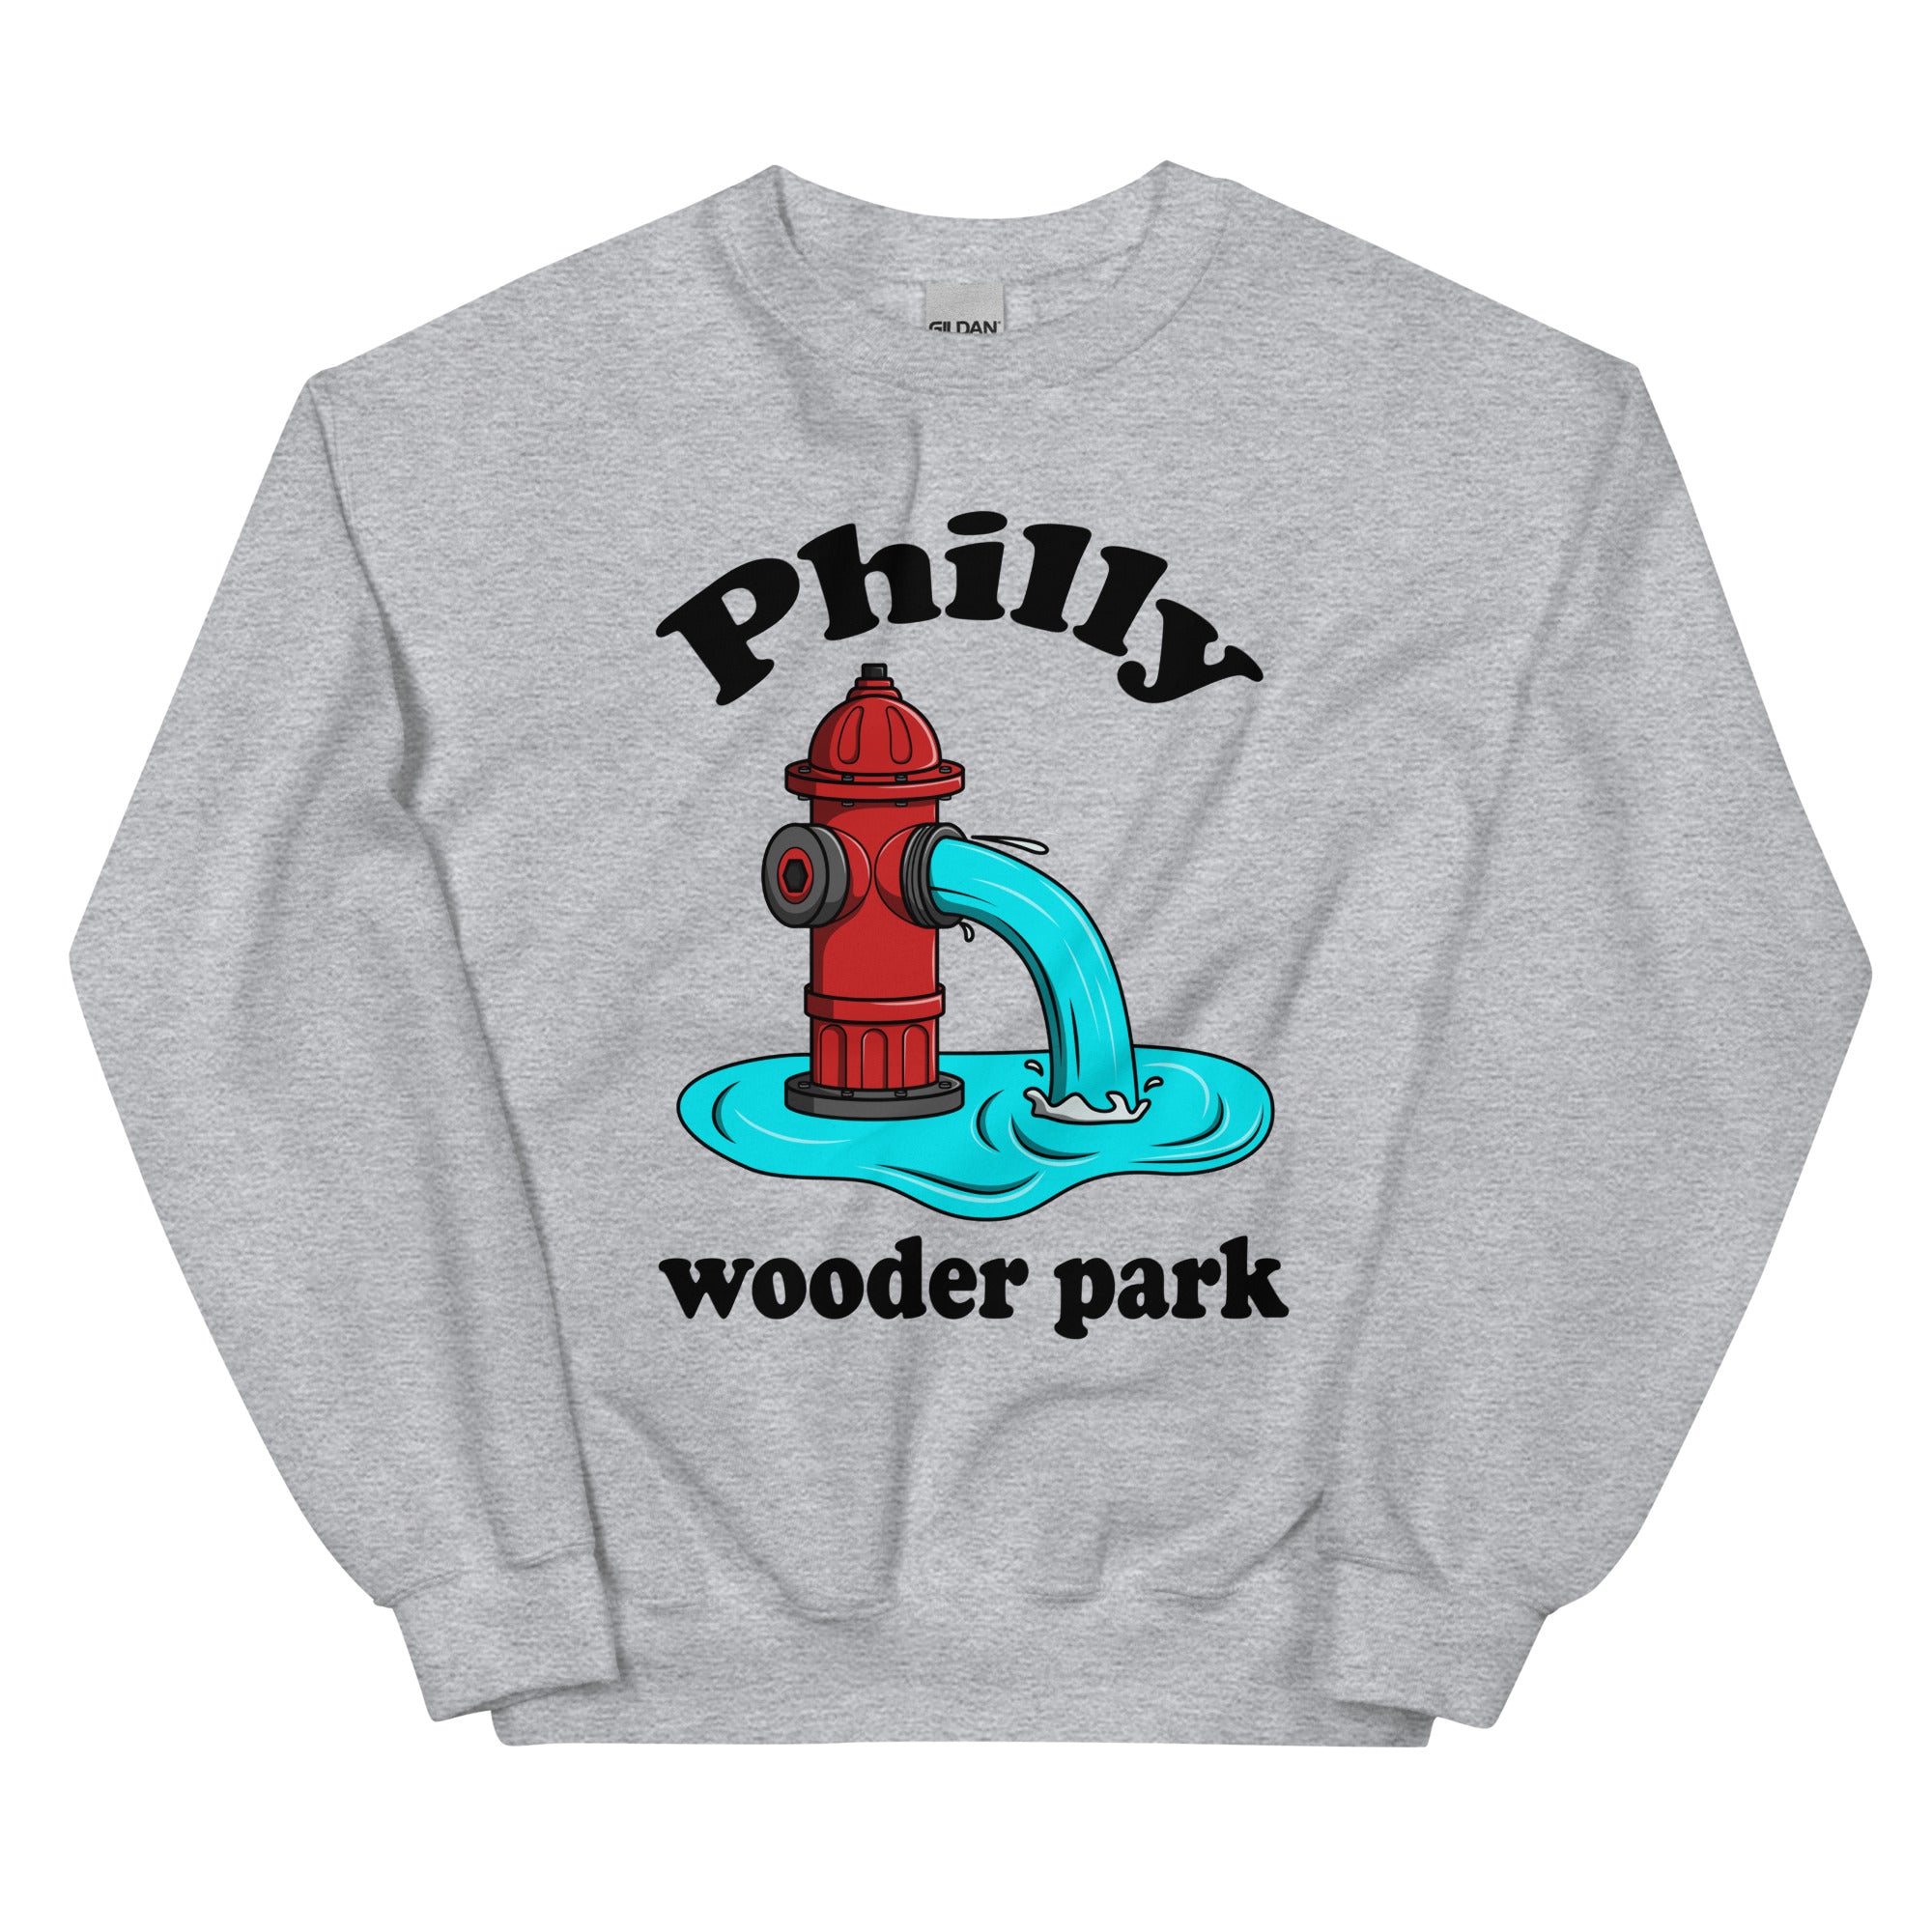 Philadelphia Philly wooder park fire hydrant funny sport grey sweatshirt Phillygoat